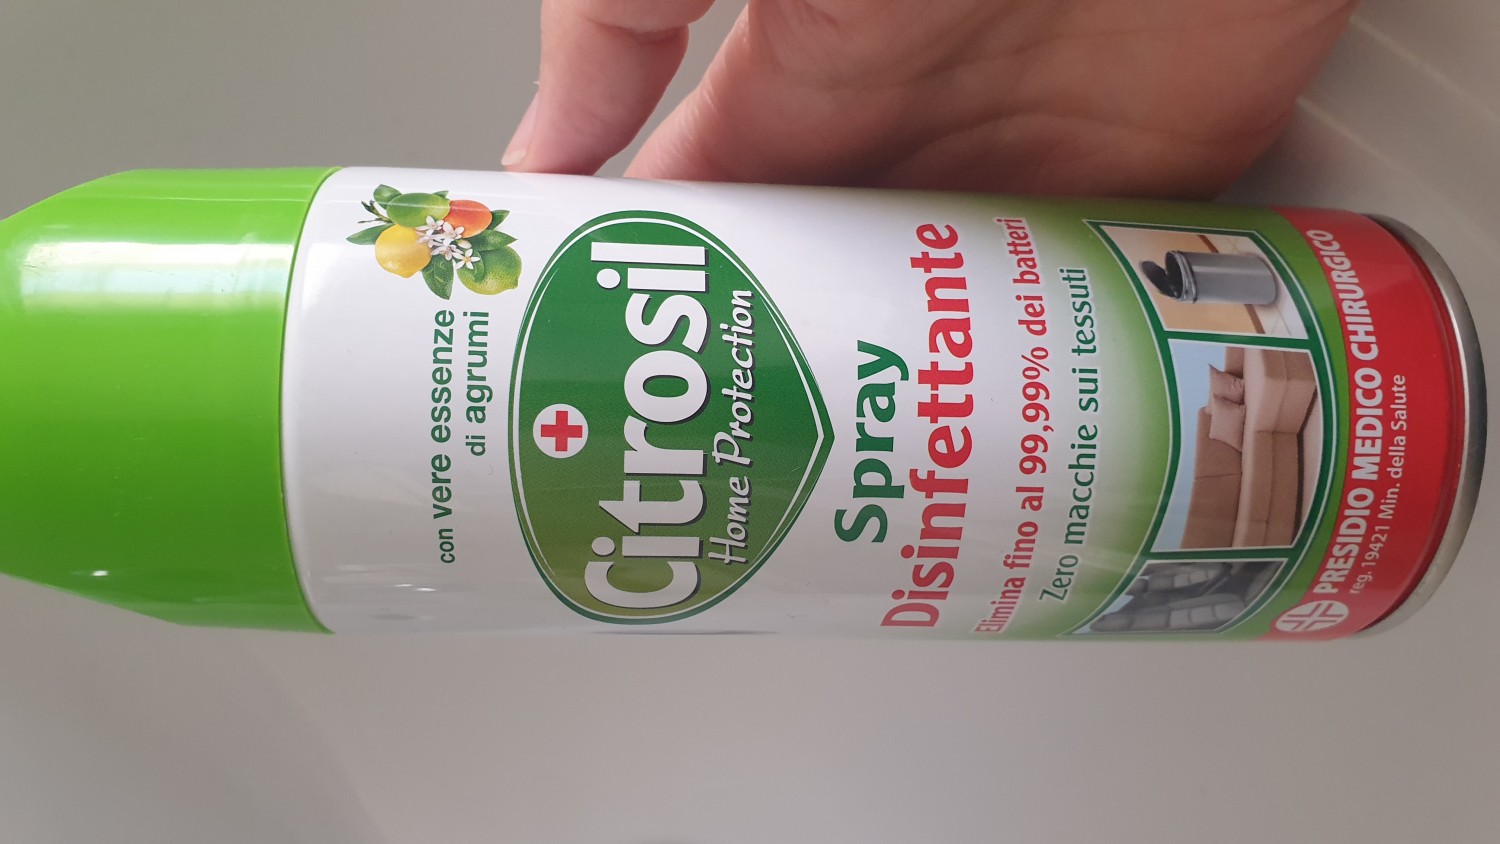 Citrosil Home Protection Spray Disinfettante - MammacheTest